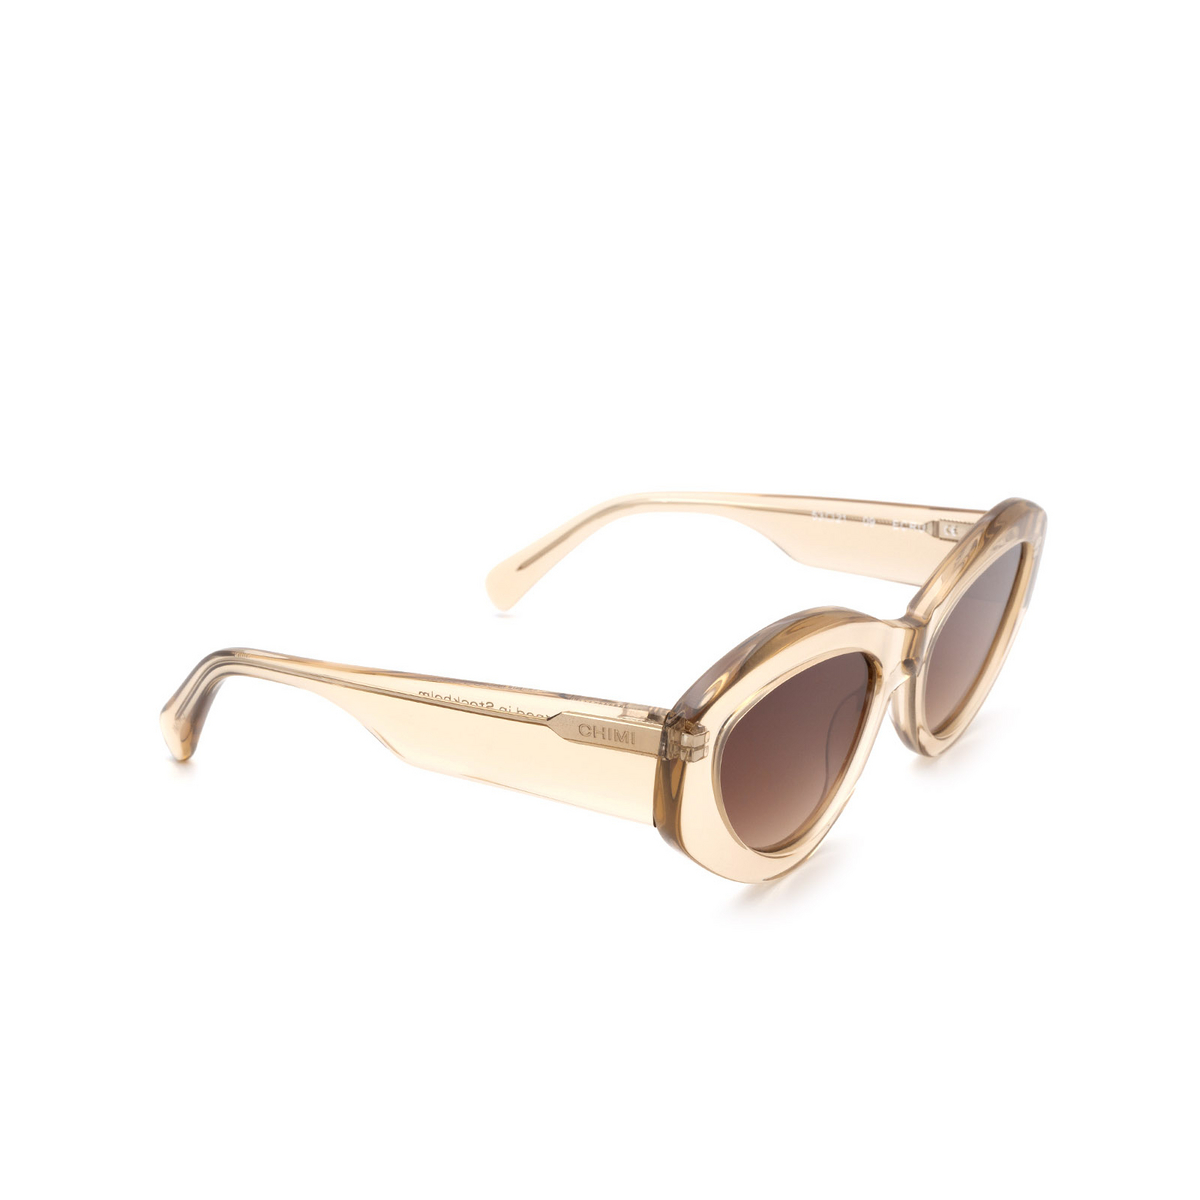 Chimi® Cat-eye Sunglasses: 09 color Ecru - three-quarters view.